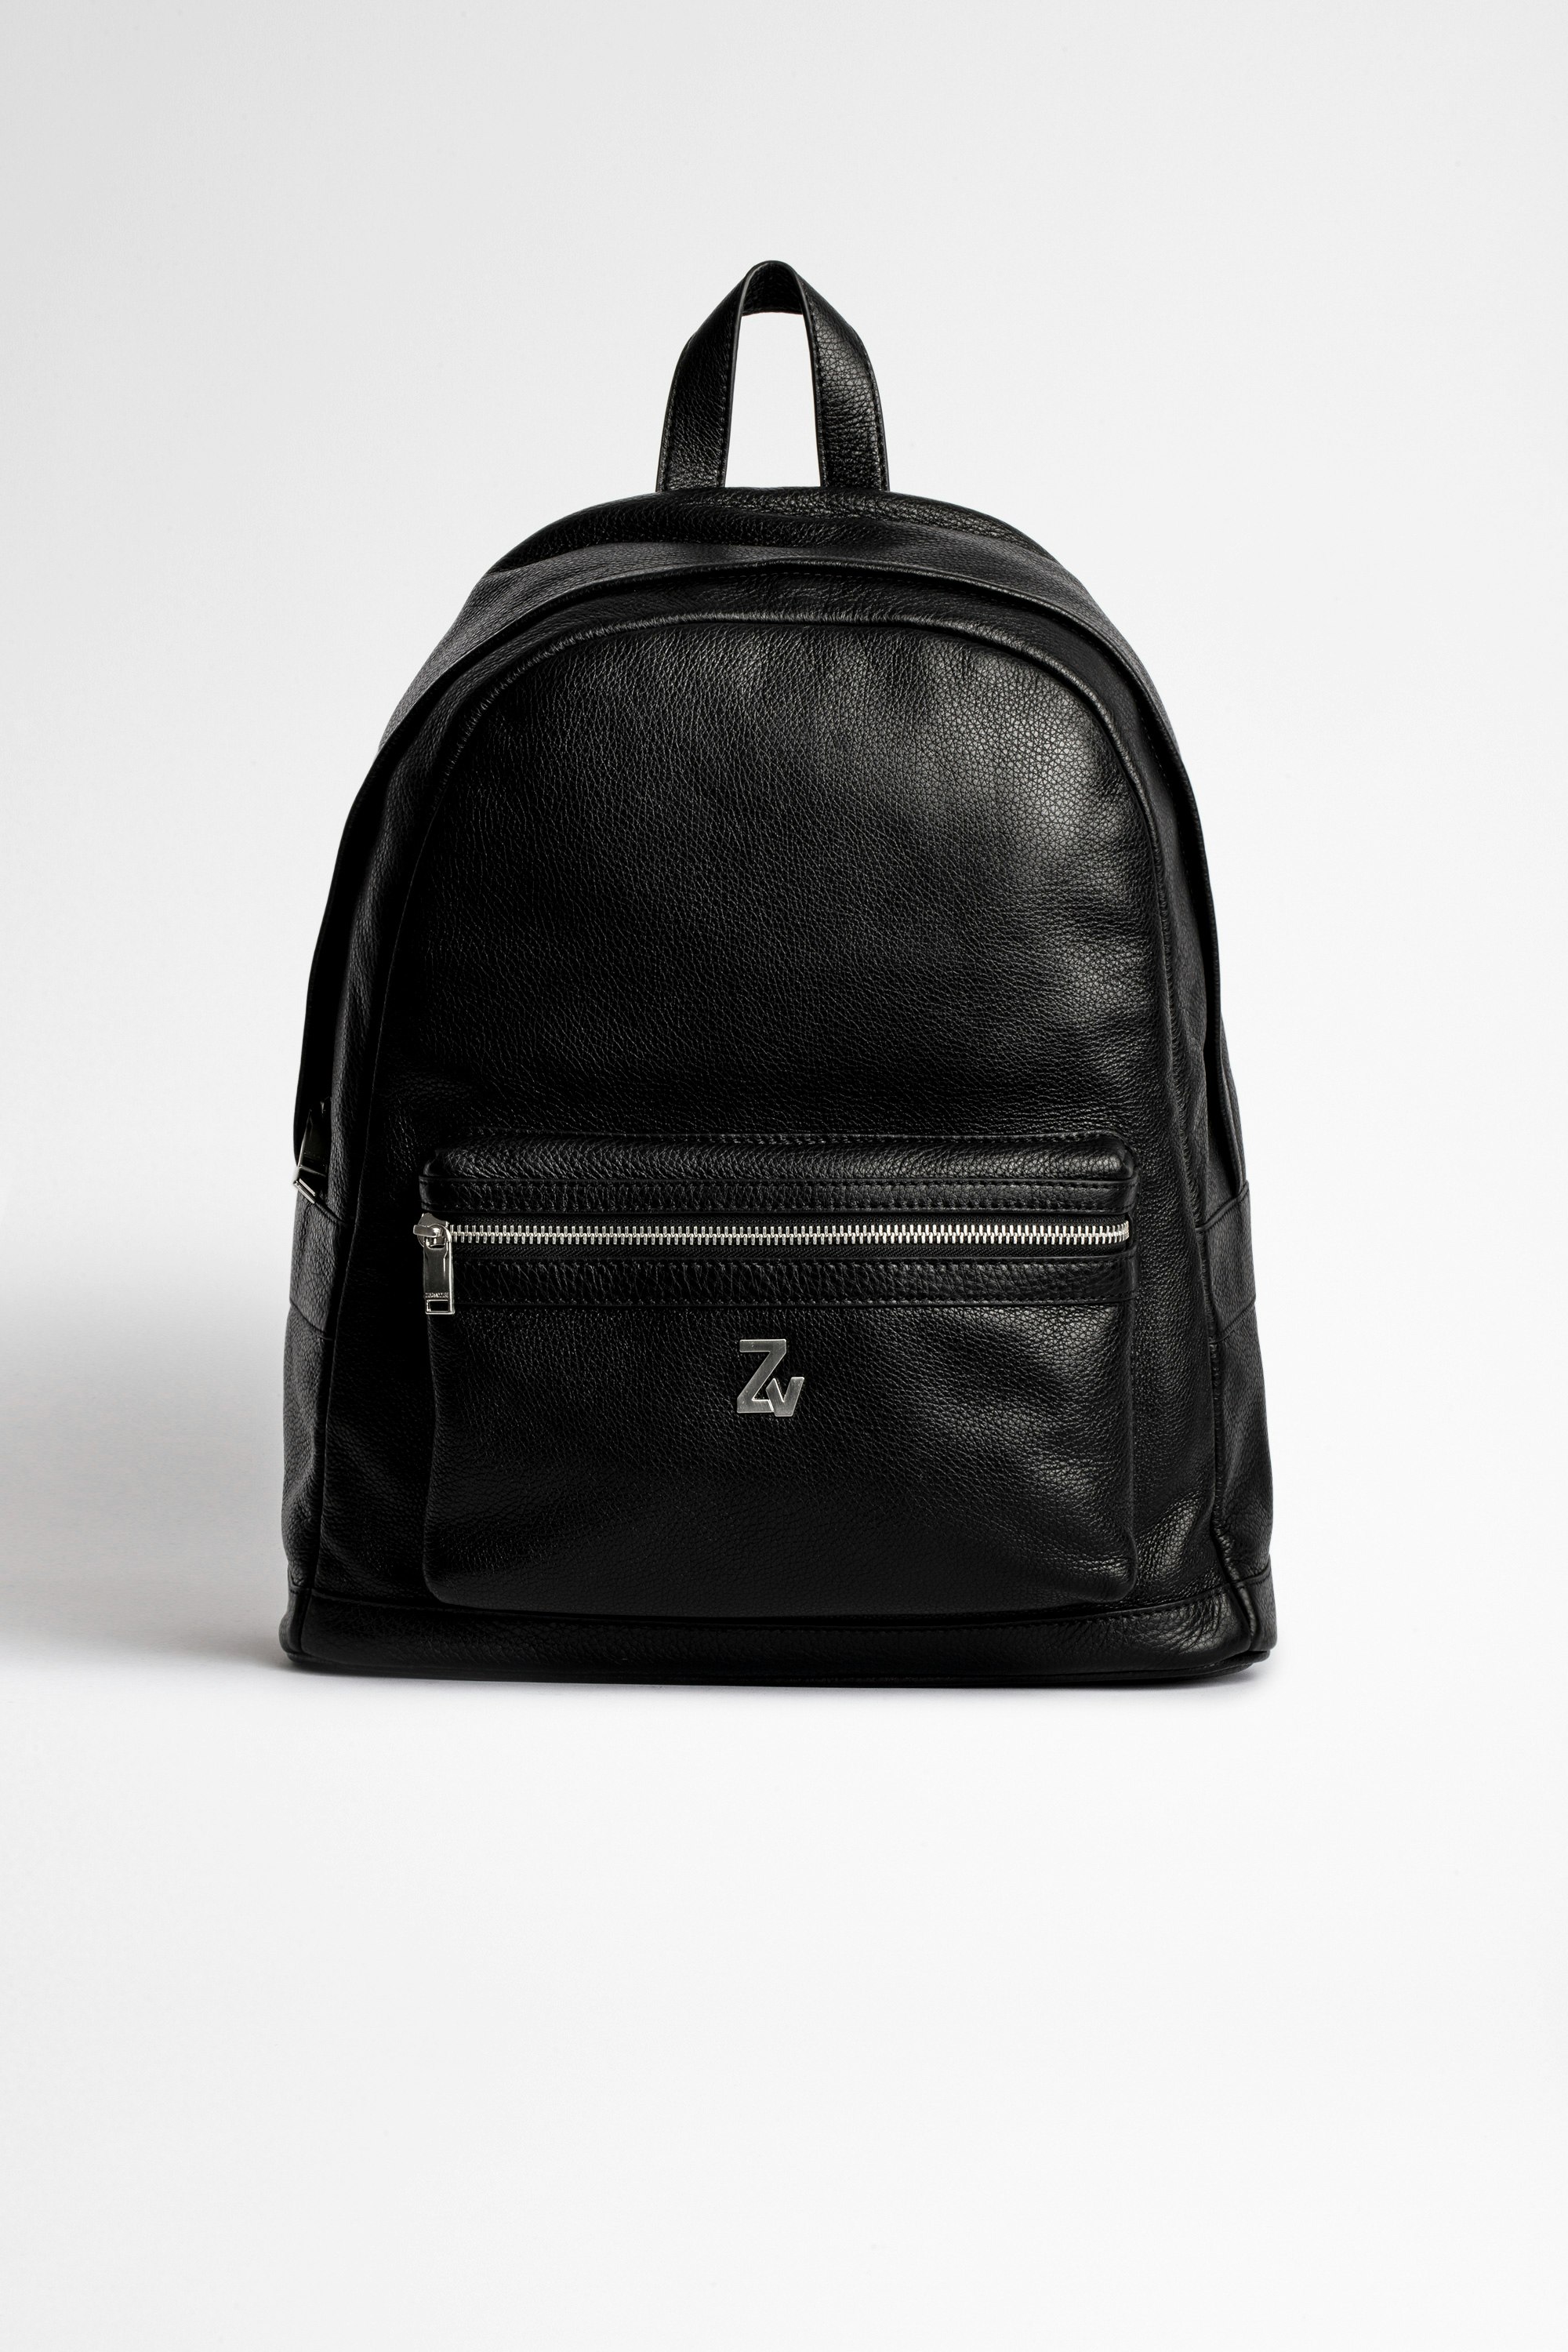 ZV Initiale Jordan バッグ Men's black grained leather bag